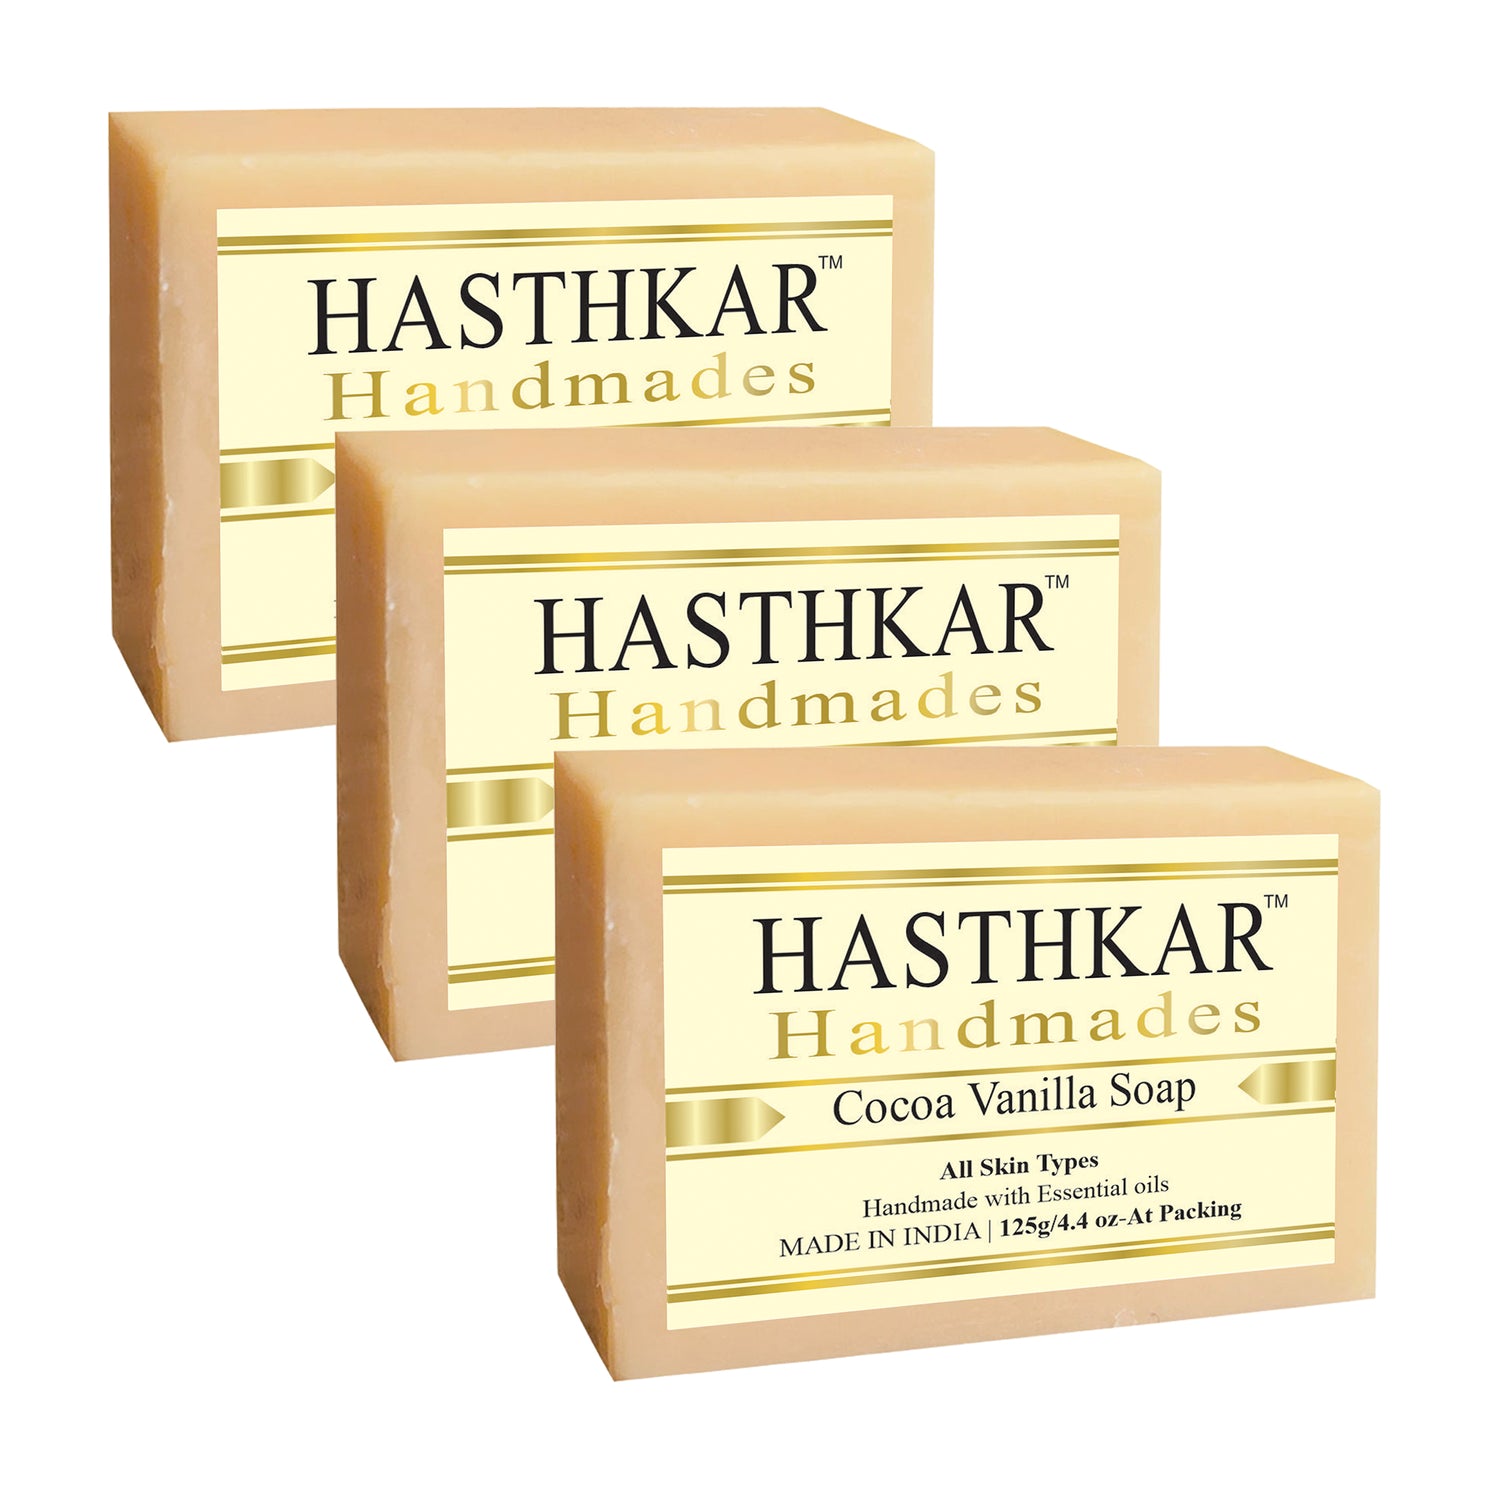 Hasthkar handmades cocoa vanilla bathing soap men women pack of 3